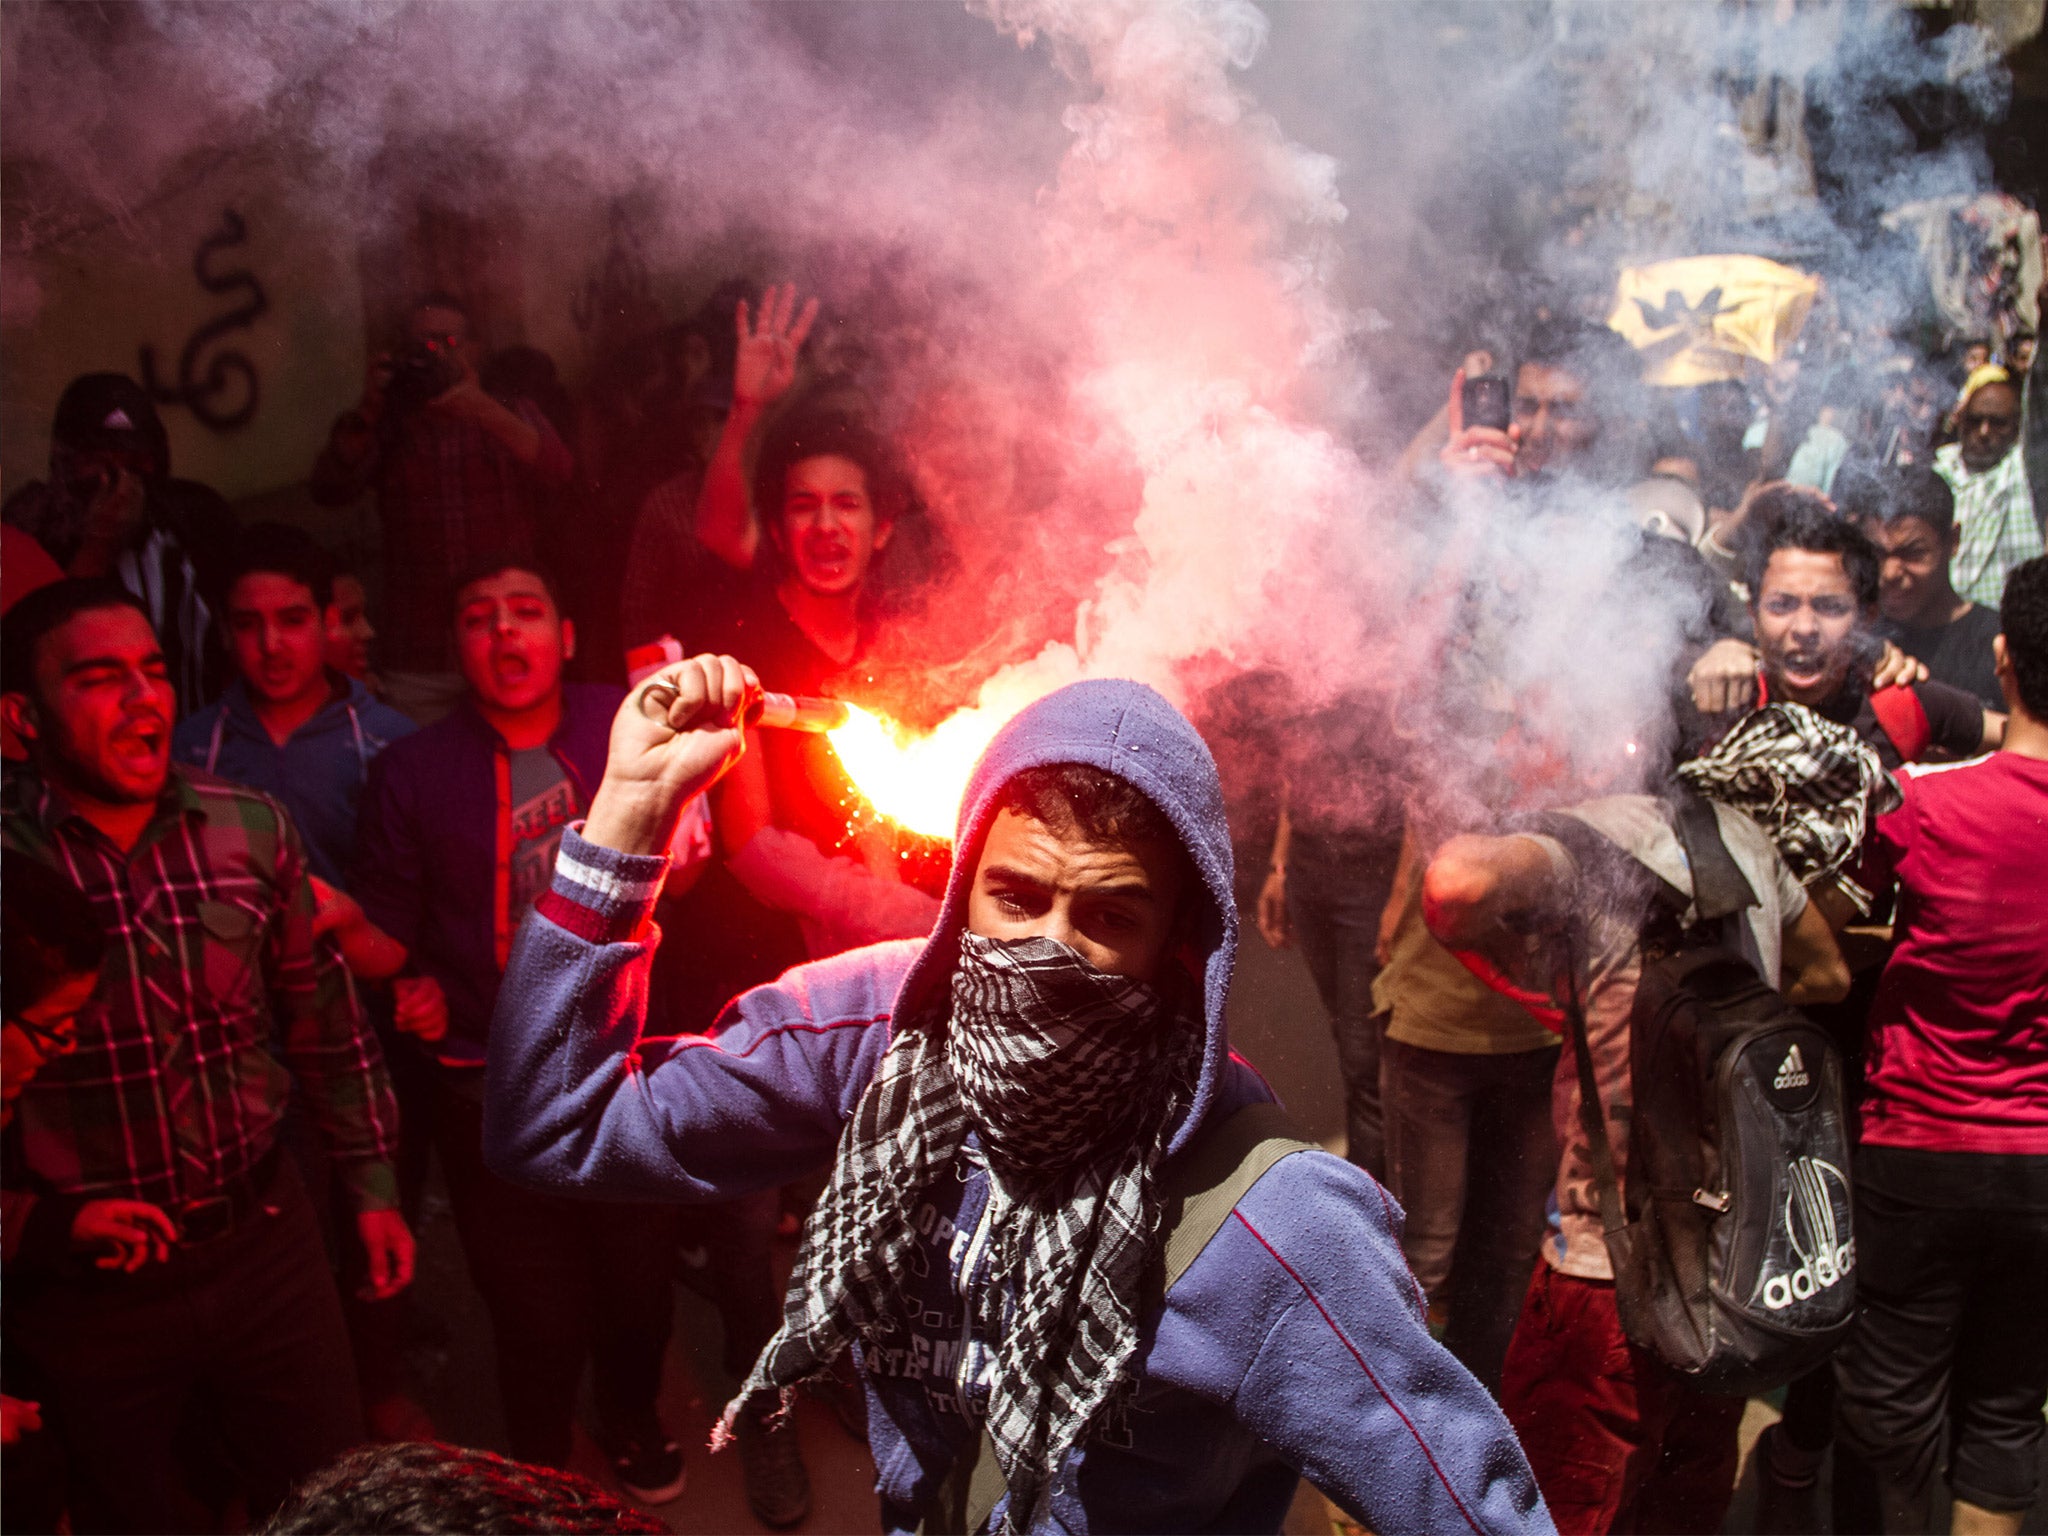 Muslim Brotherhood supporters demonstrate near Cairo last month